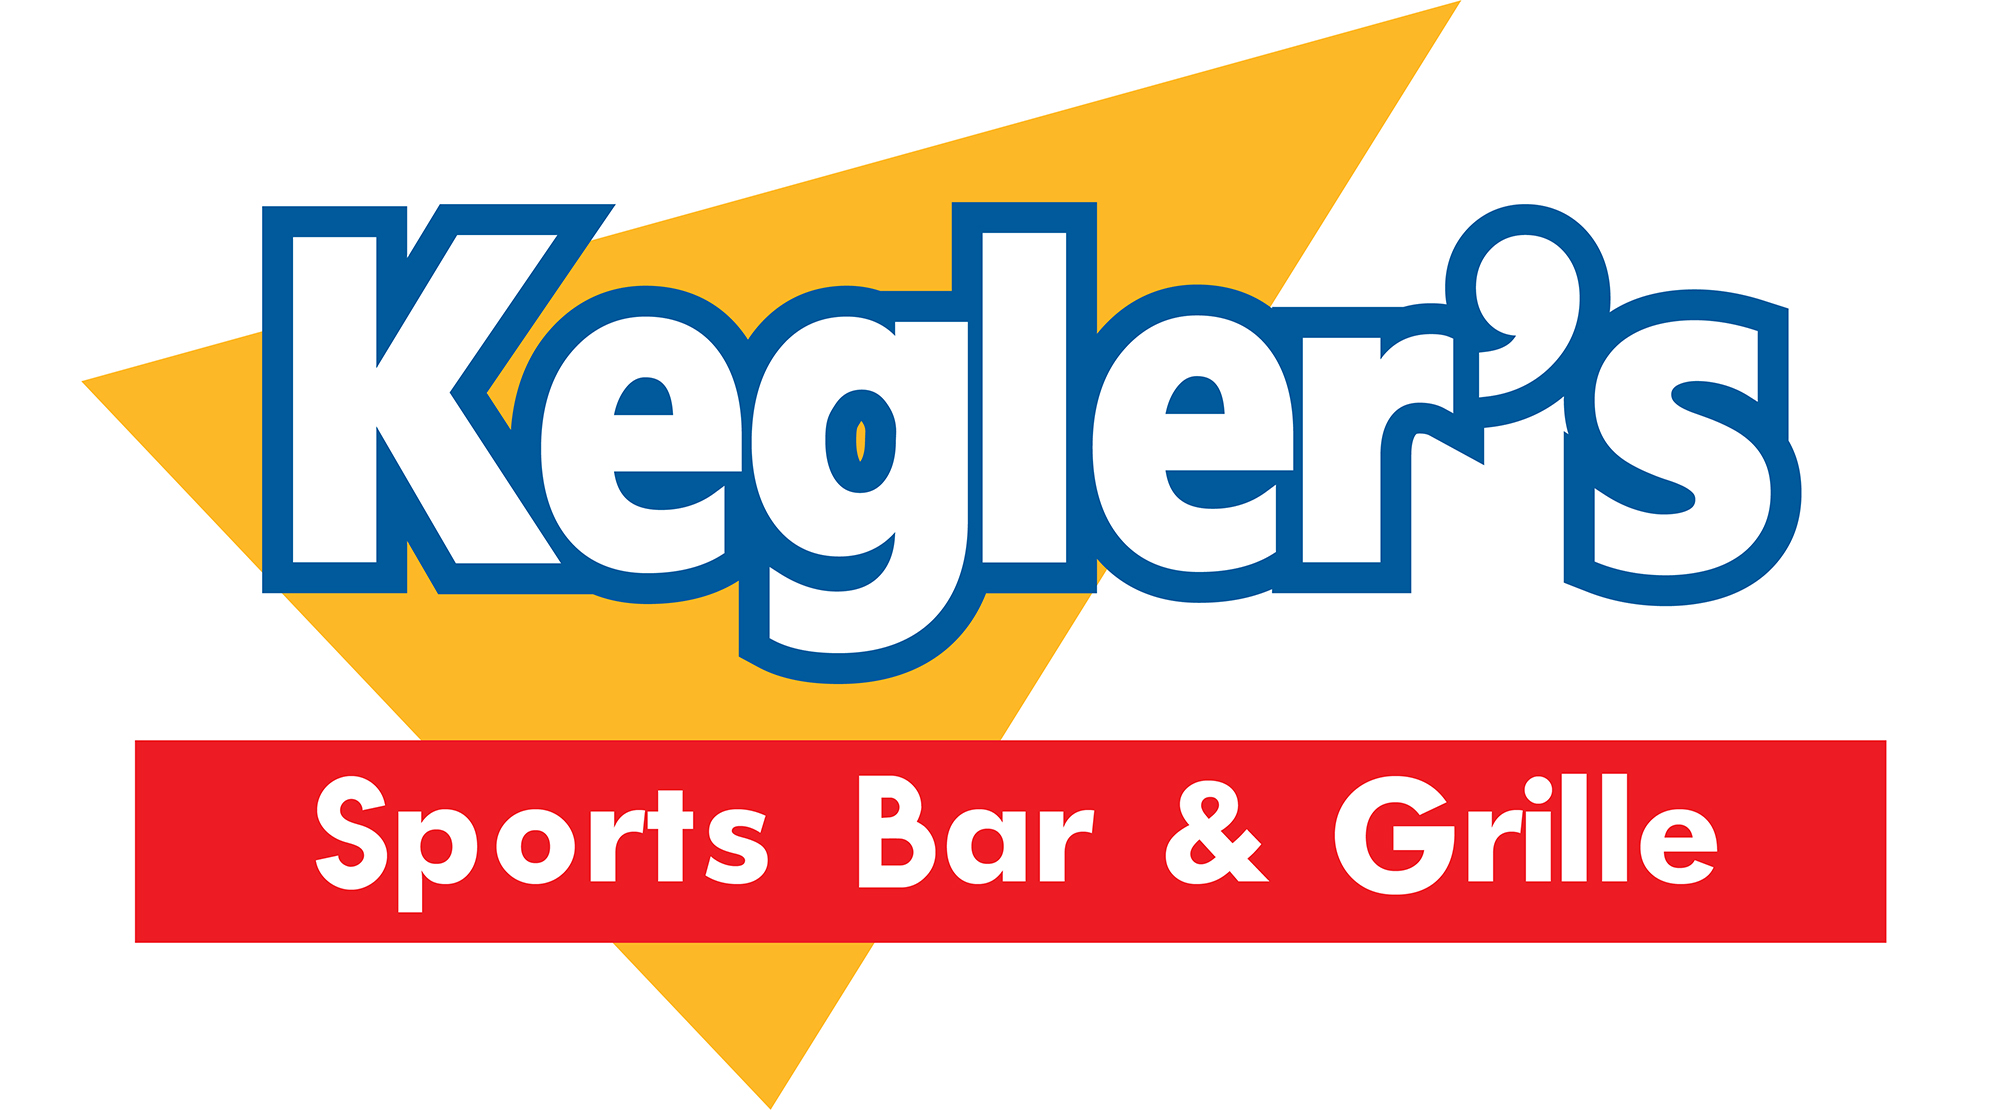 Keglers logo